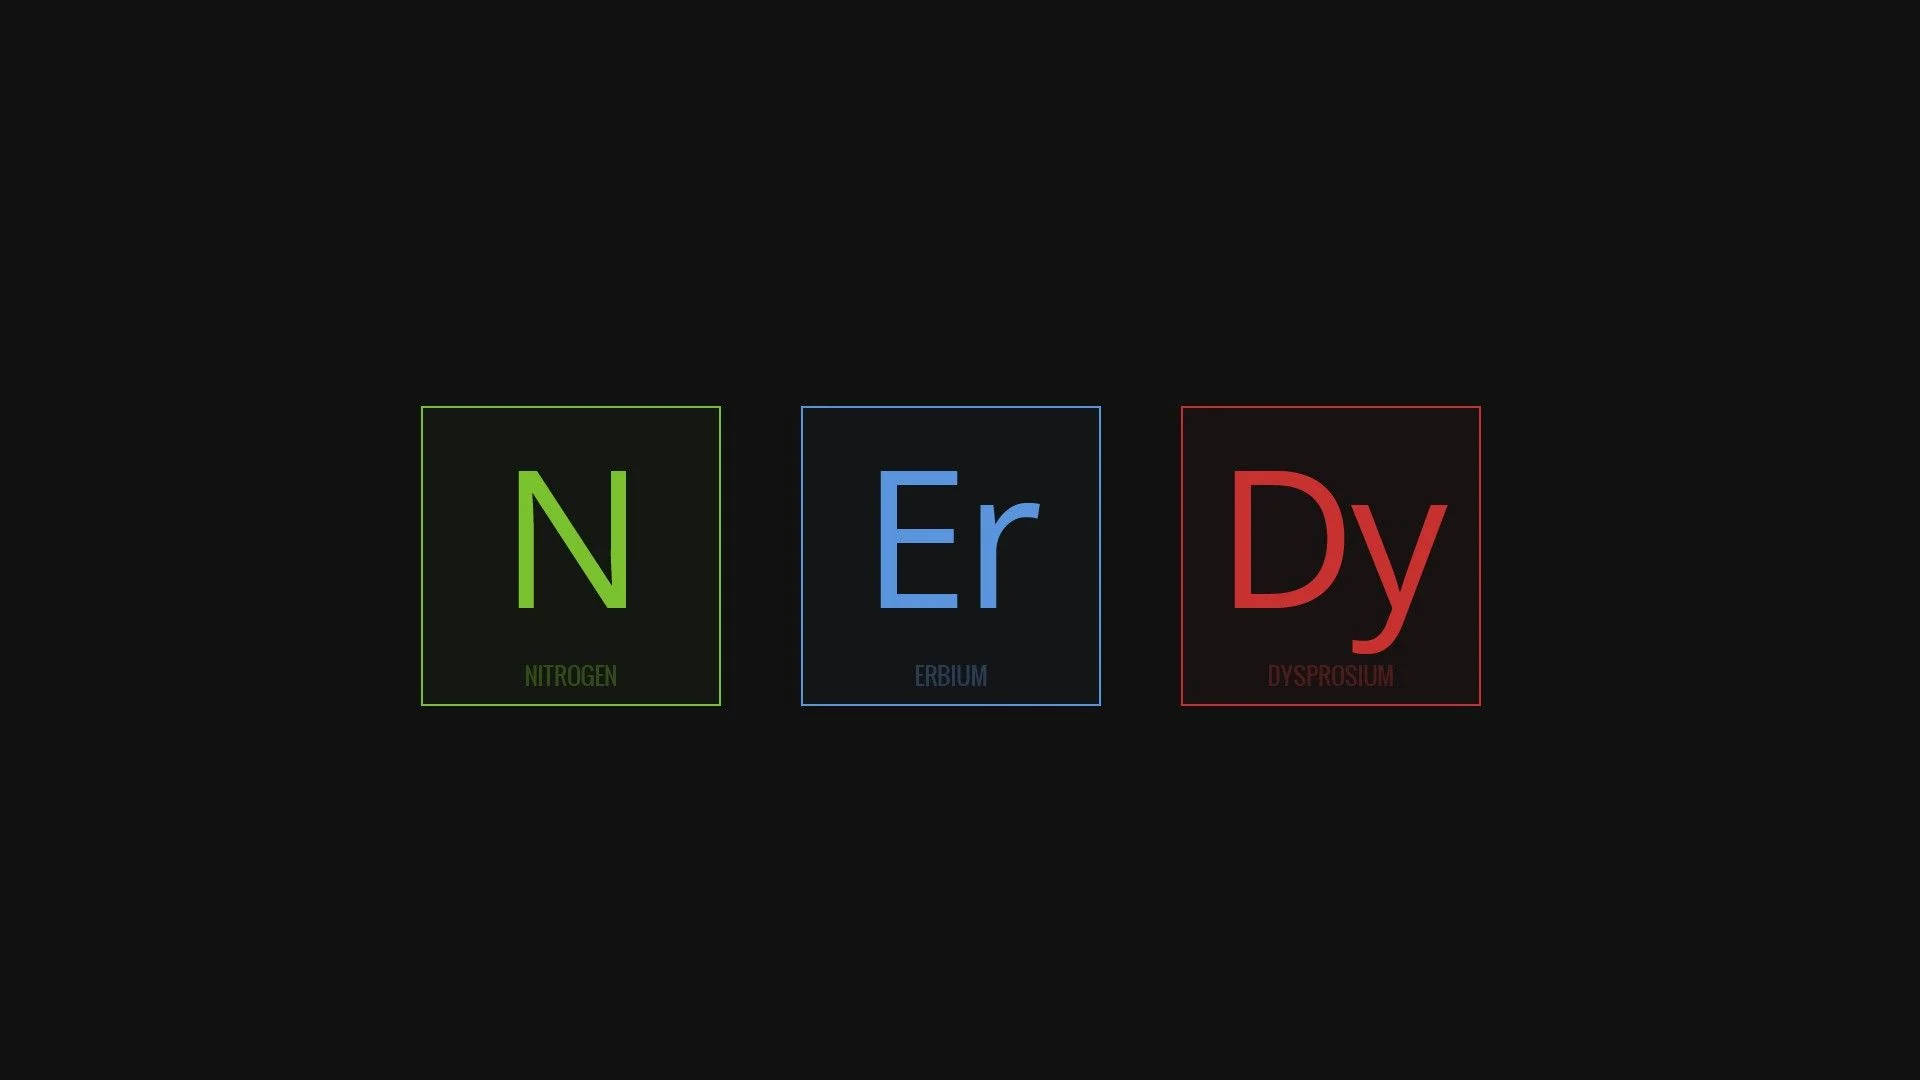 Nerdy Elements Typography Background